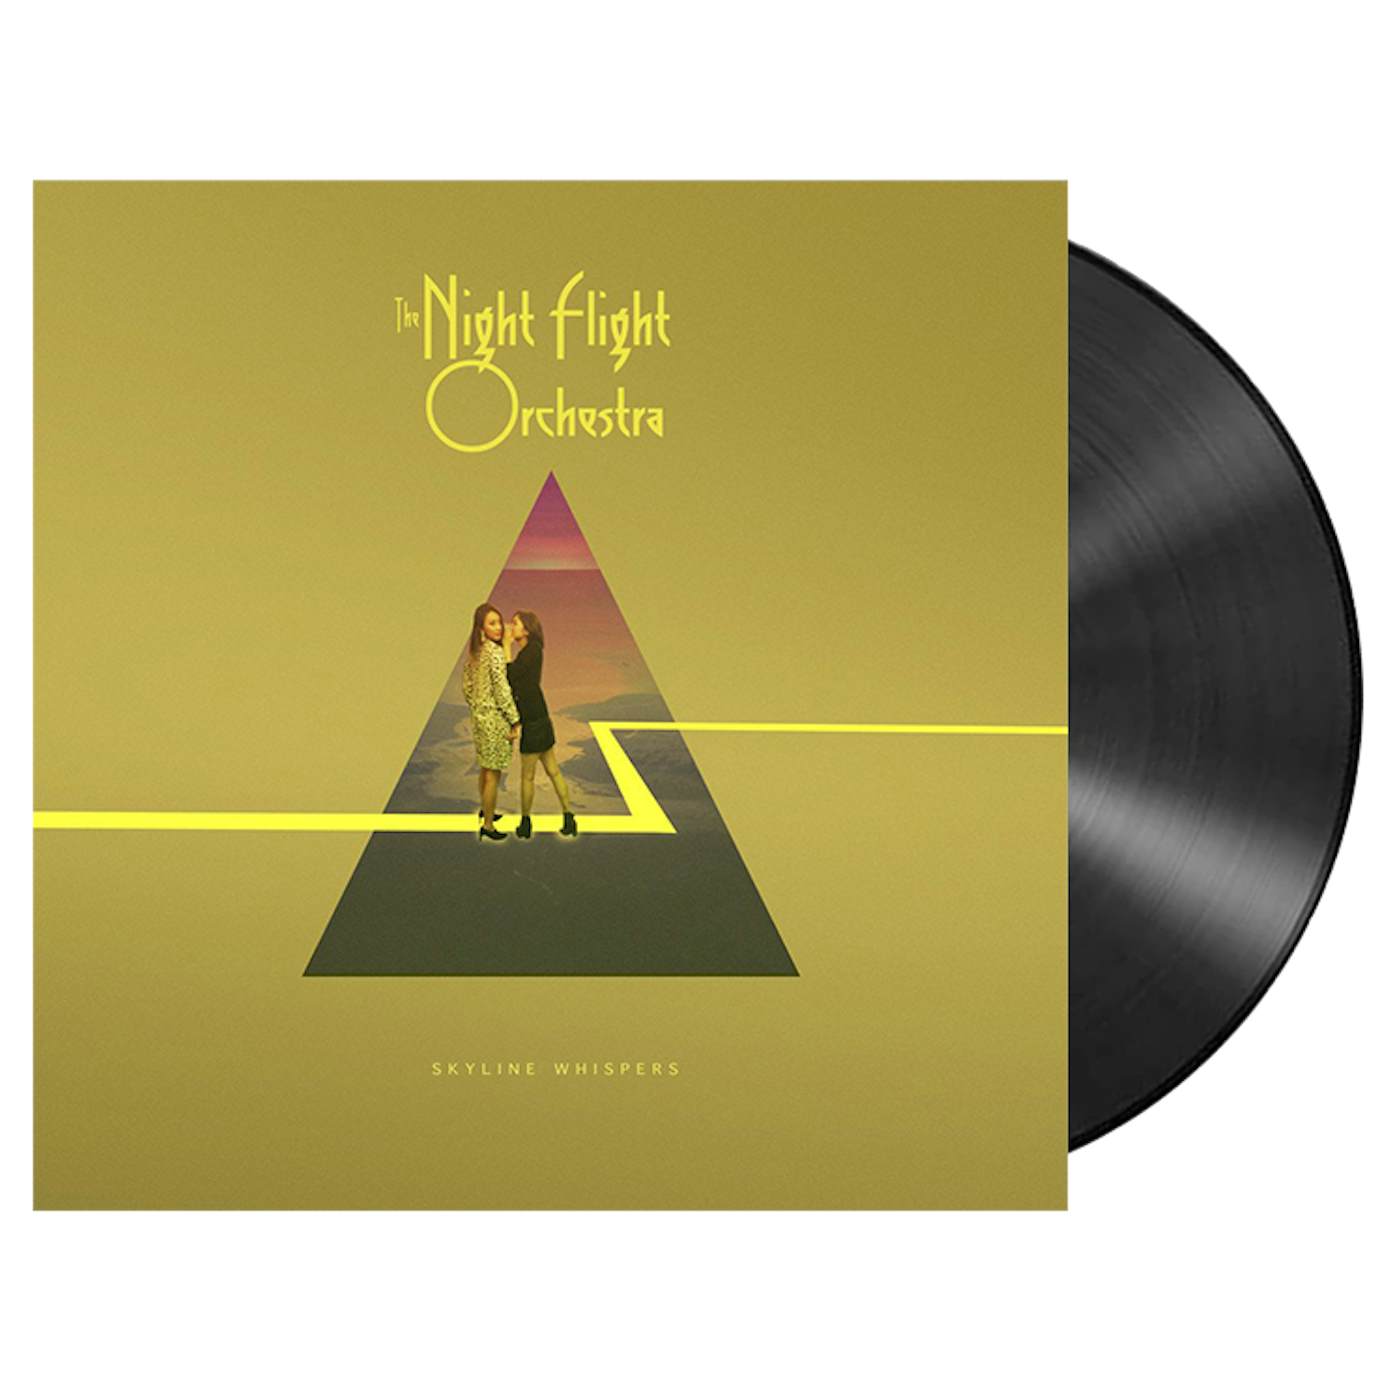 THE NIGHT FLIGHT ORCHESTRA - 'Skyline Whispers' 2xLP (Vinyl)